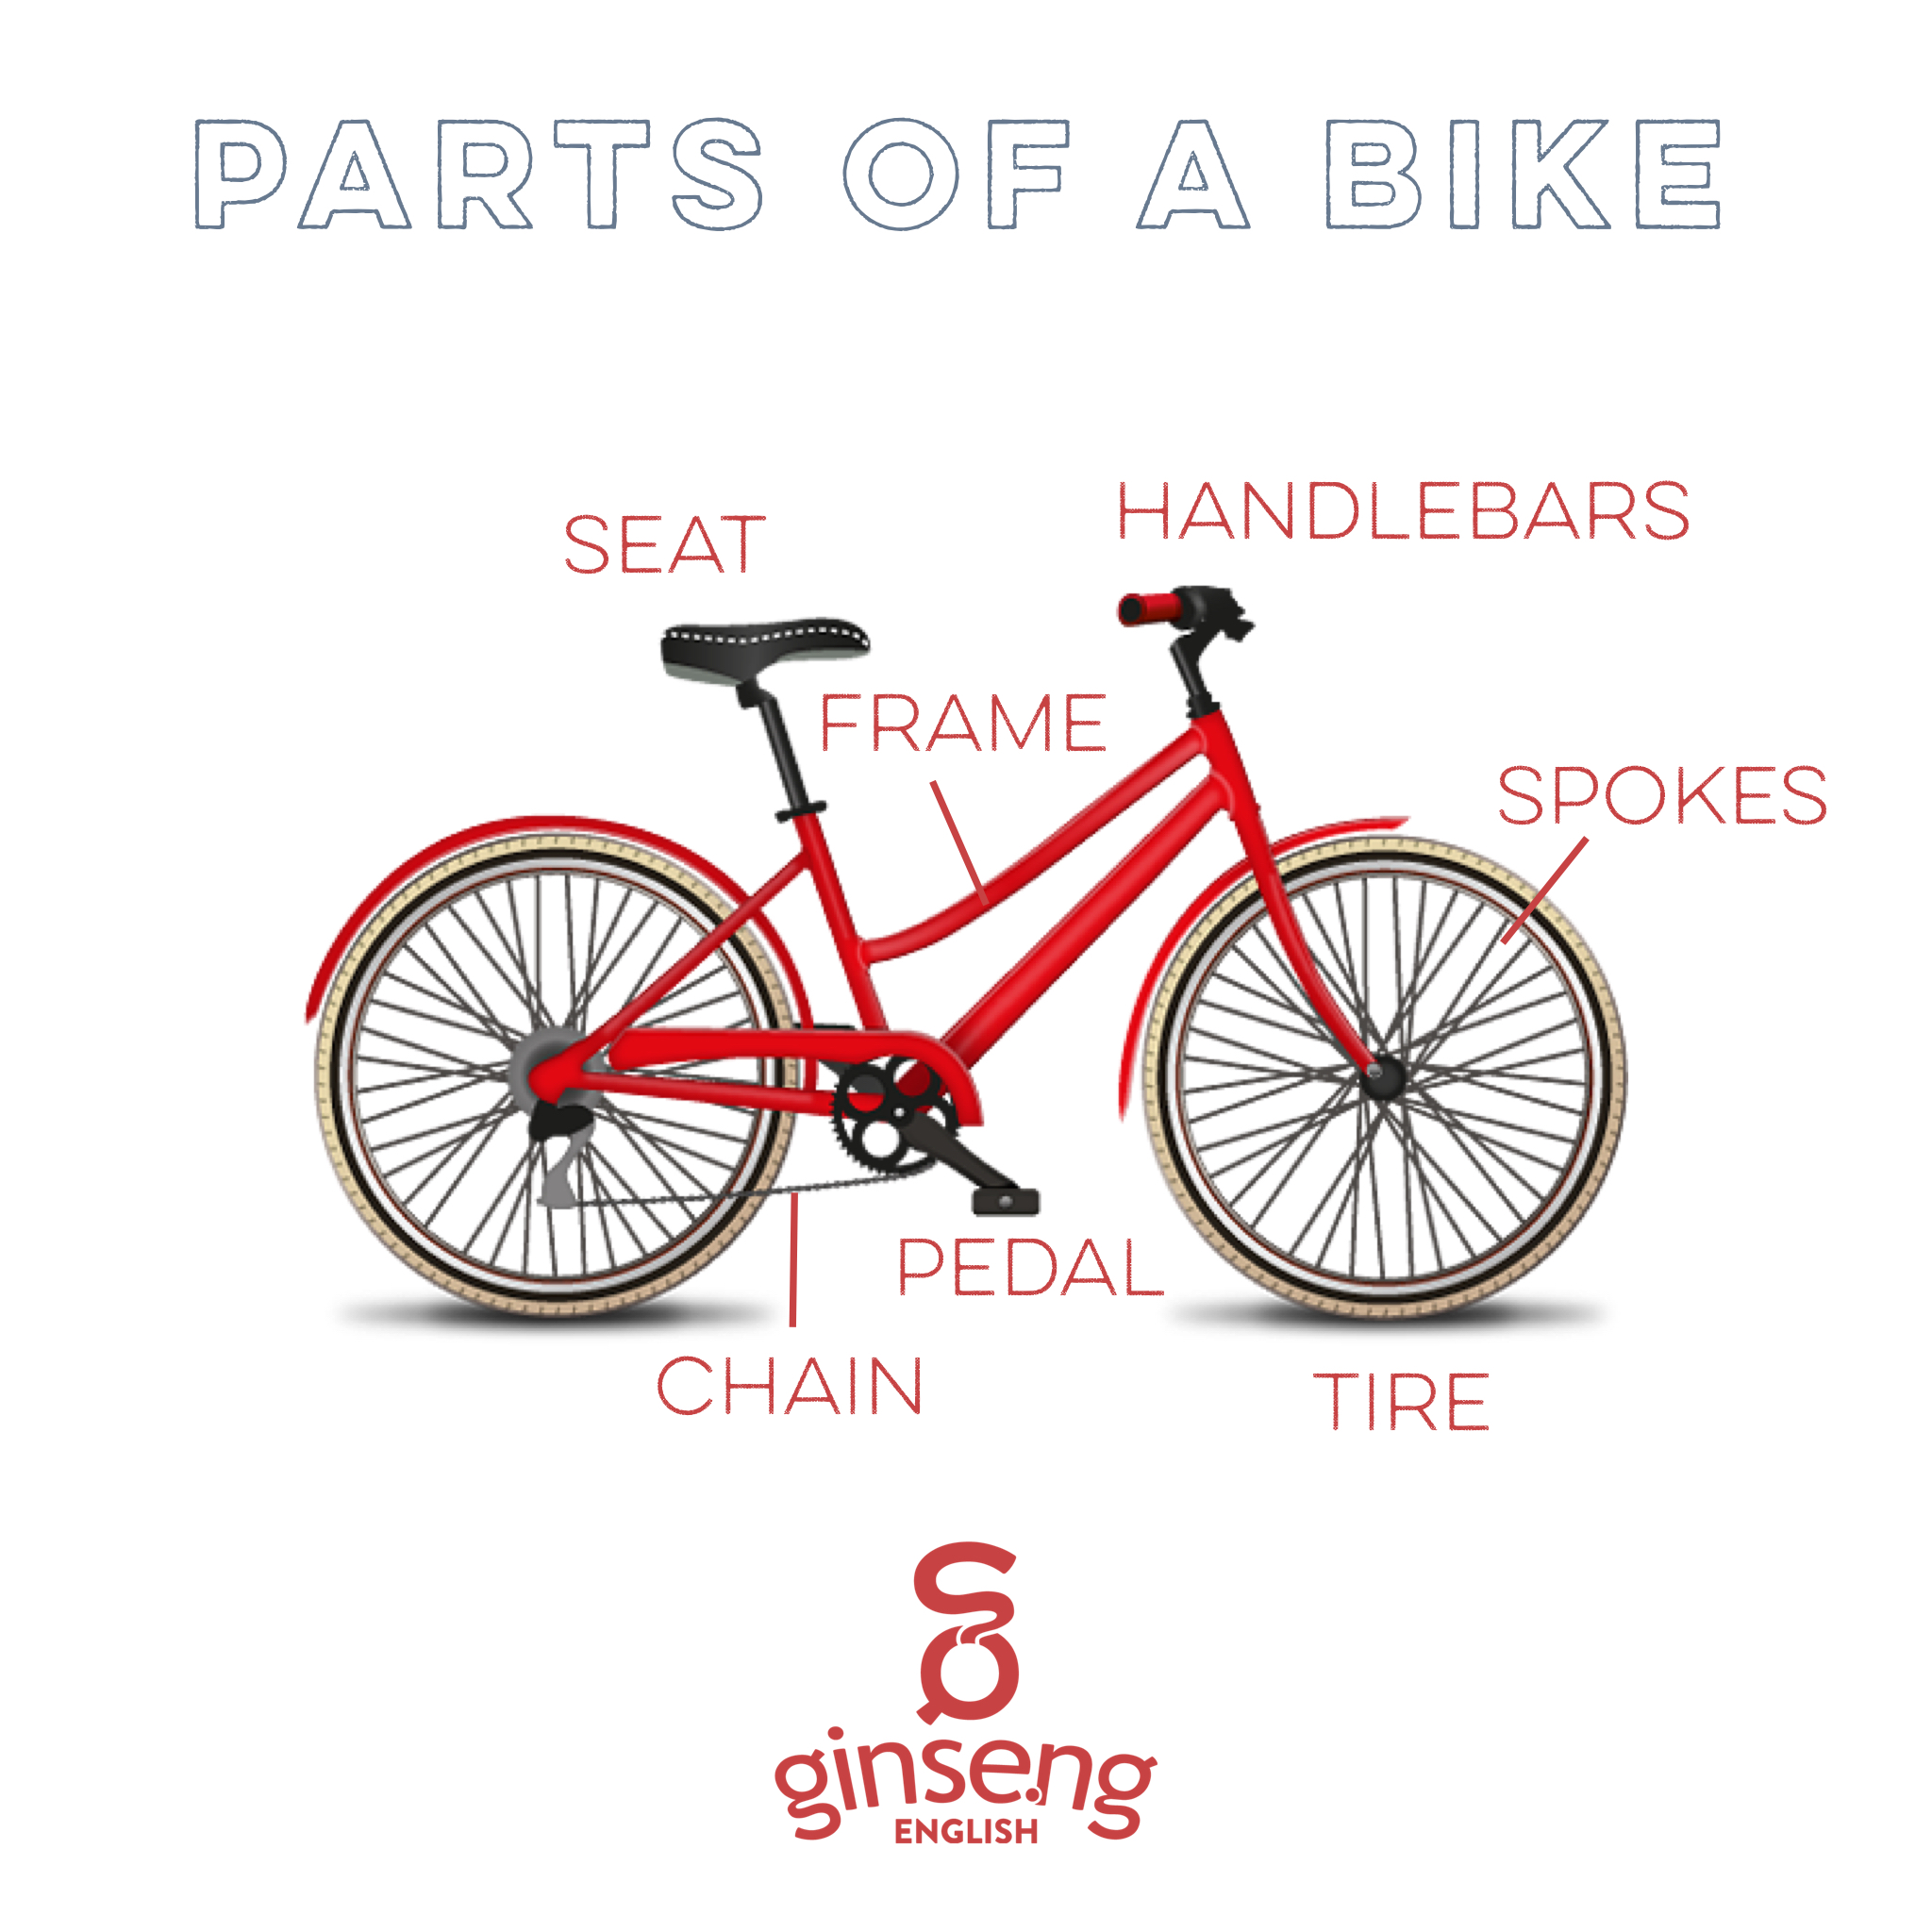 Велосипед по английскому. Bicycle Parts in English. Part of Bicycle. Bike по-английски.